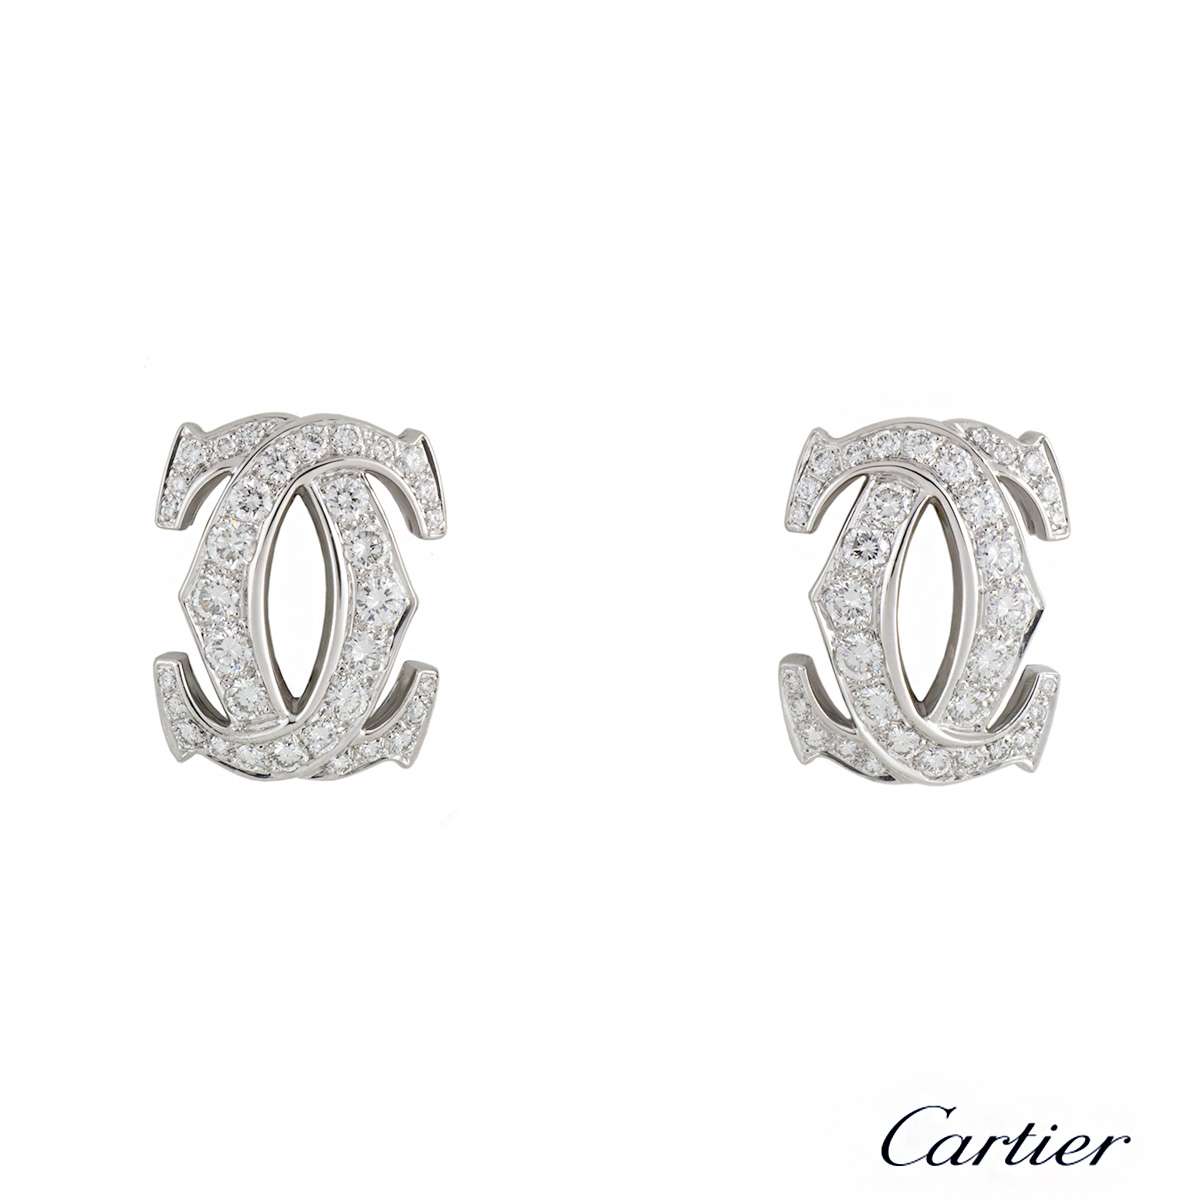 c de cartier earrings white gold diamonds